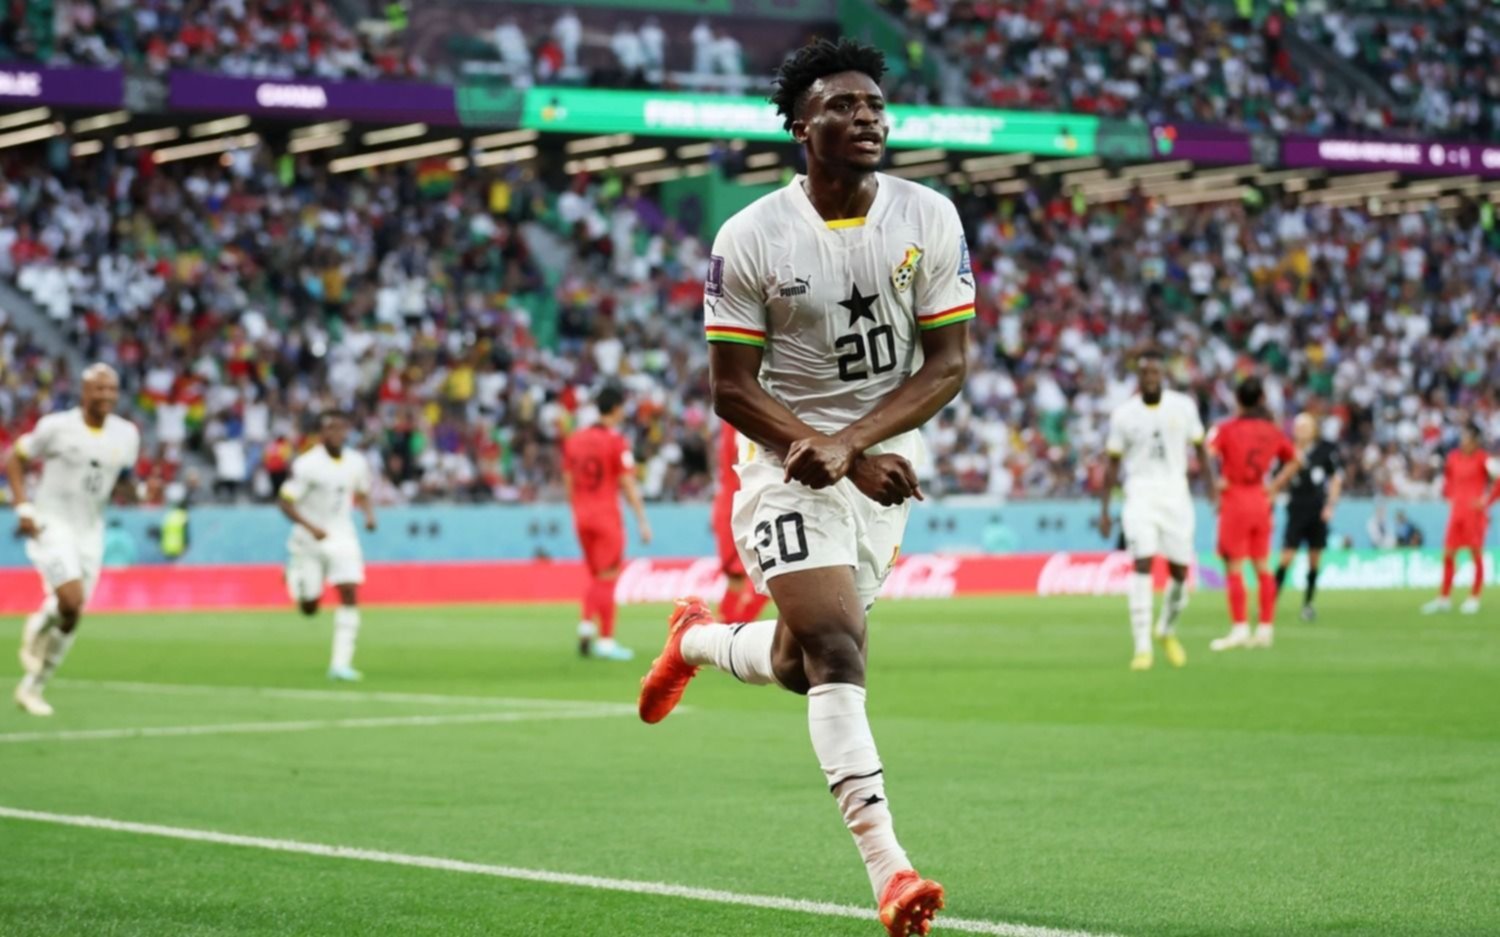 Con una lluvia de goles, Ghana derrotó a Corea del Sur por 3 a 2